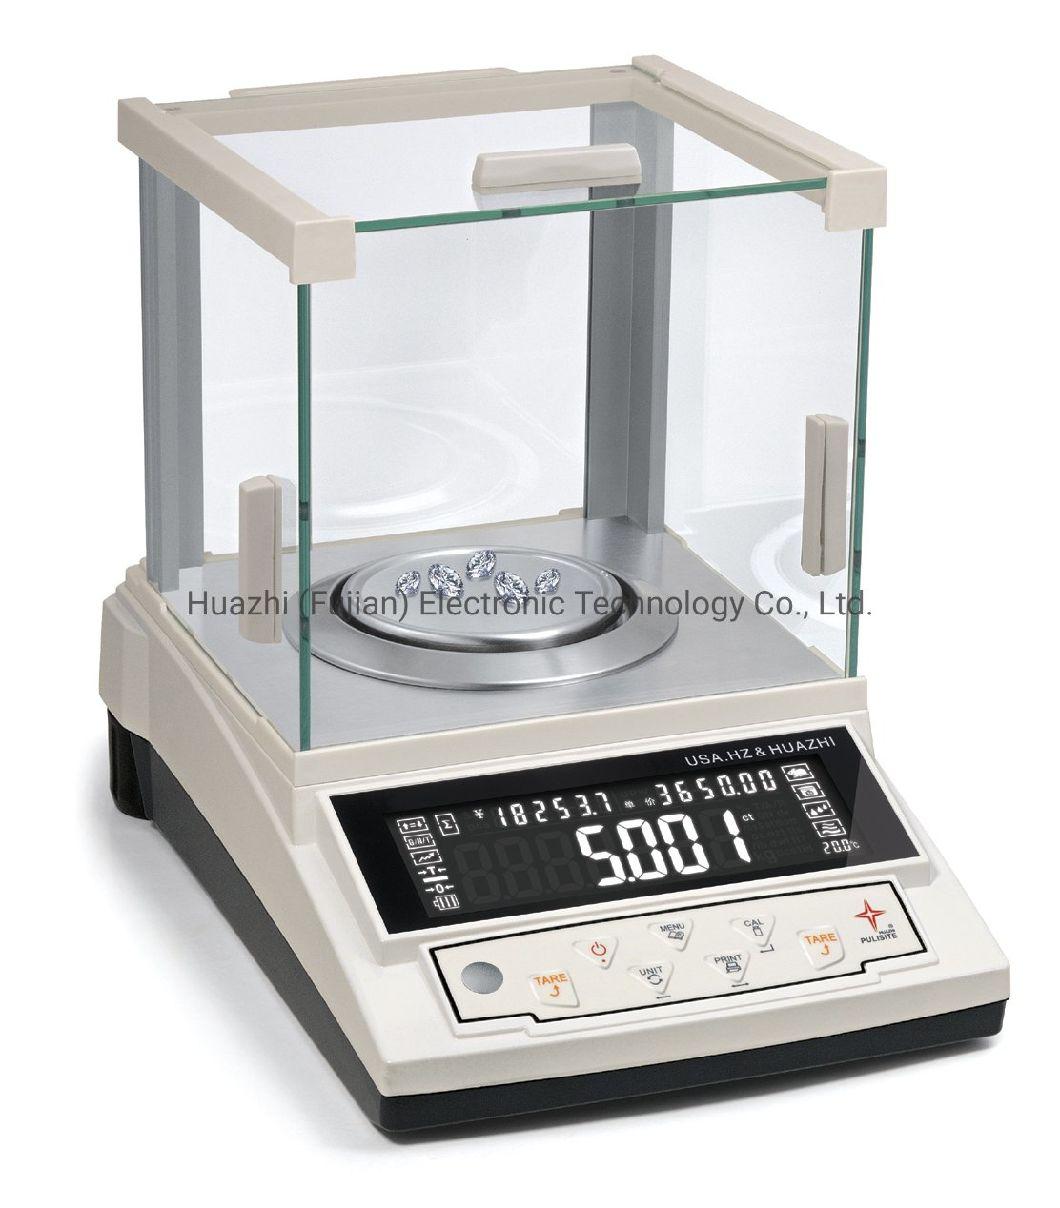 1kg Electronic Scale for Gold Karat Measurement and Density Determination